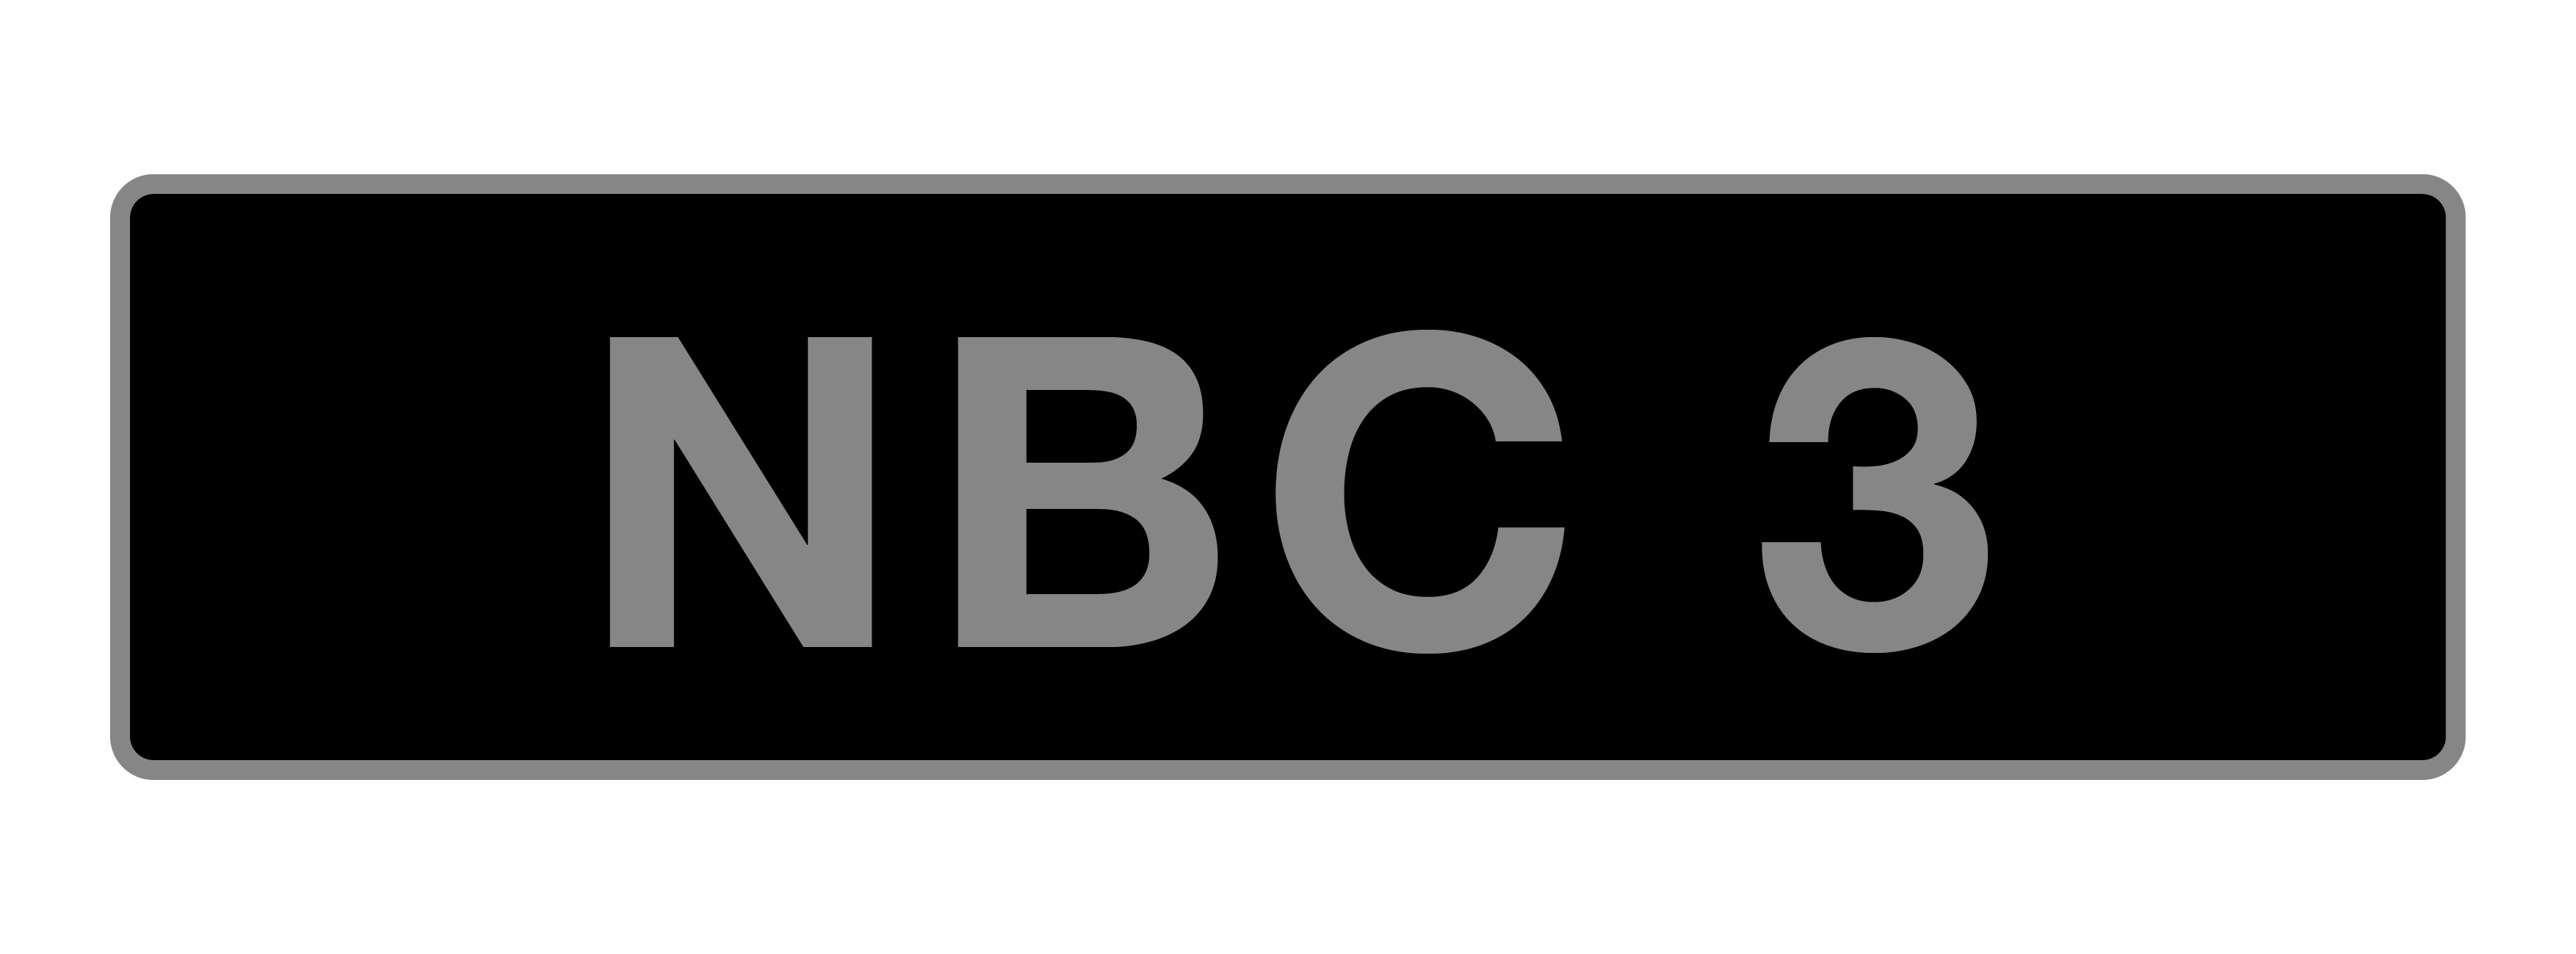 UK Vehicle Registration Number 'NBC 3',